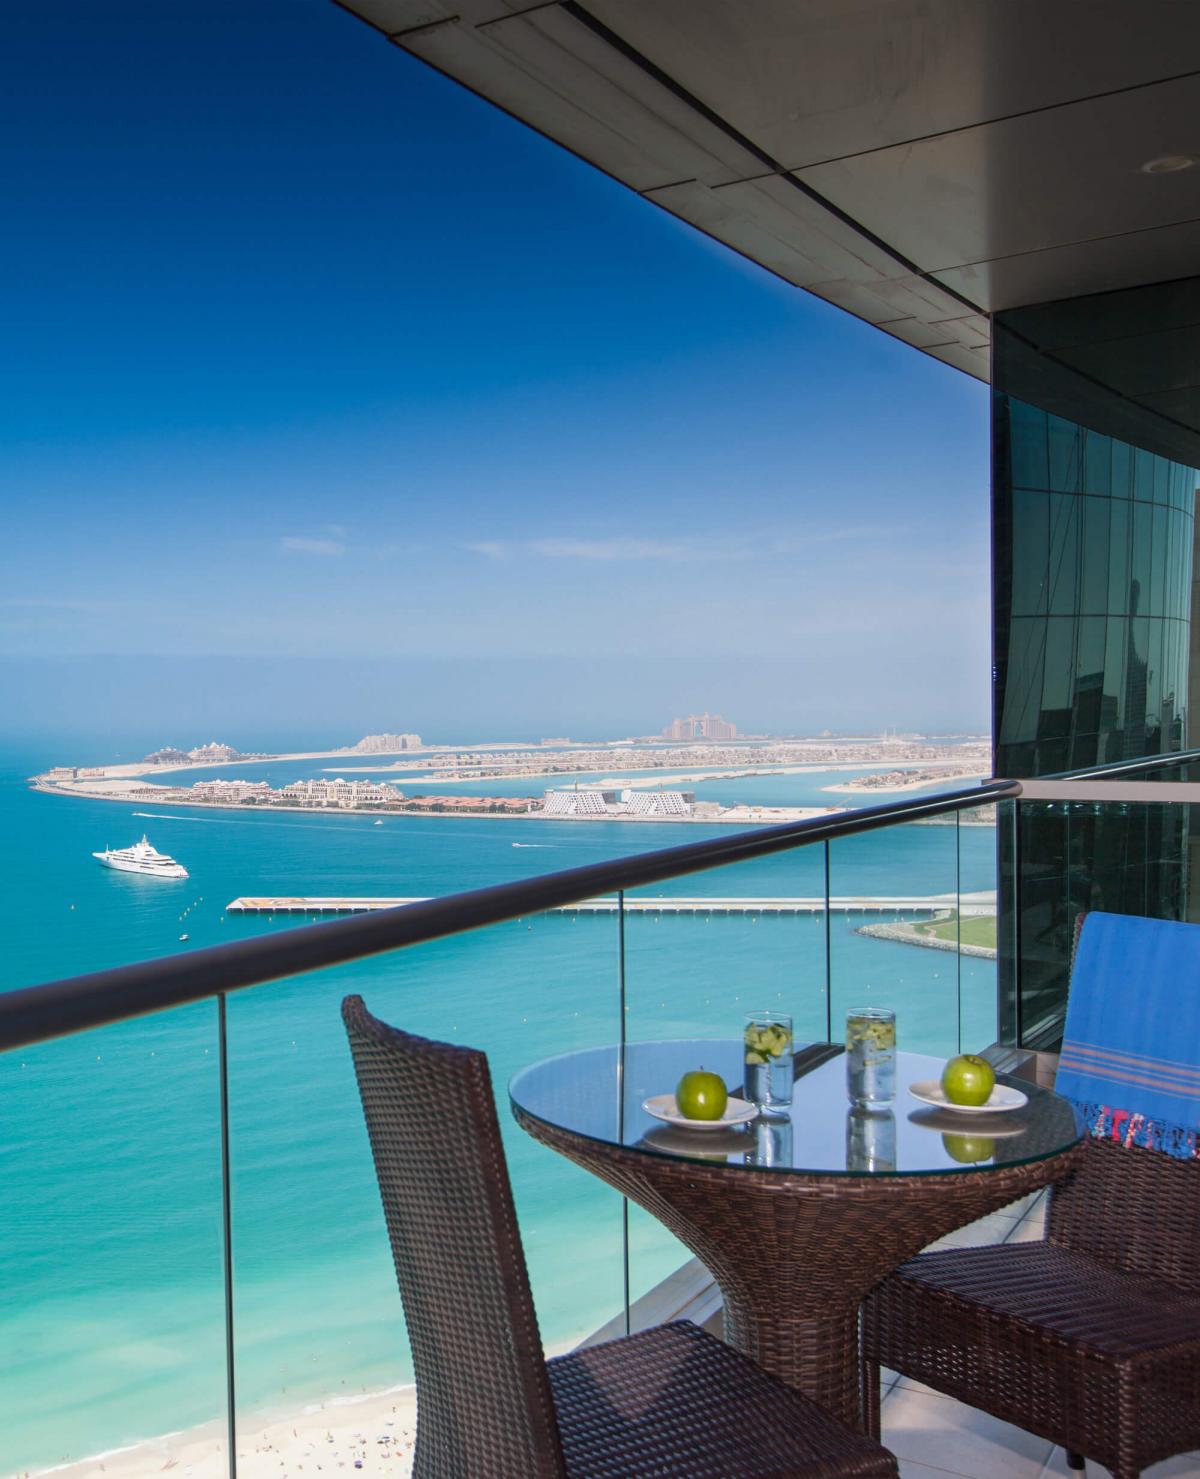 JA Ocean View Hotel, book a golf getaway in Dubai